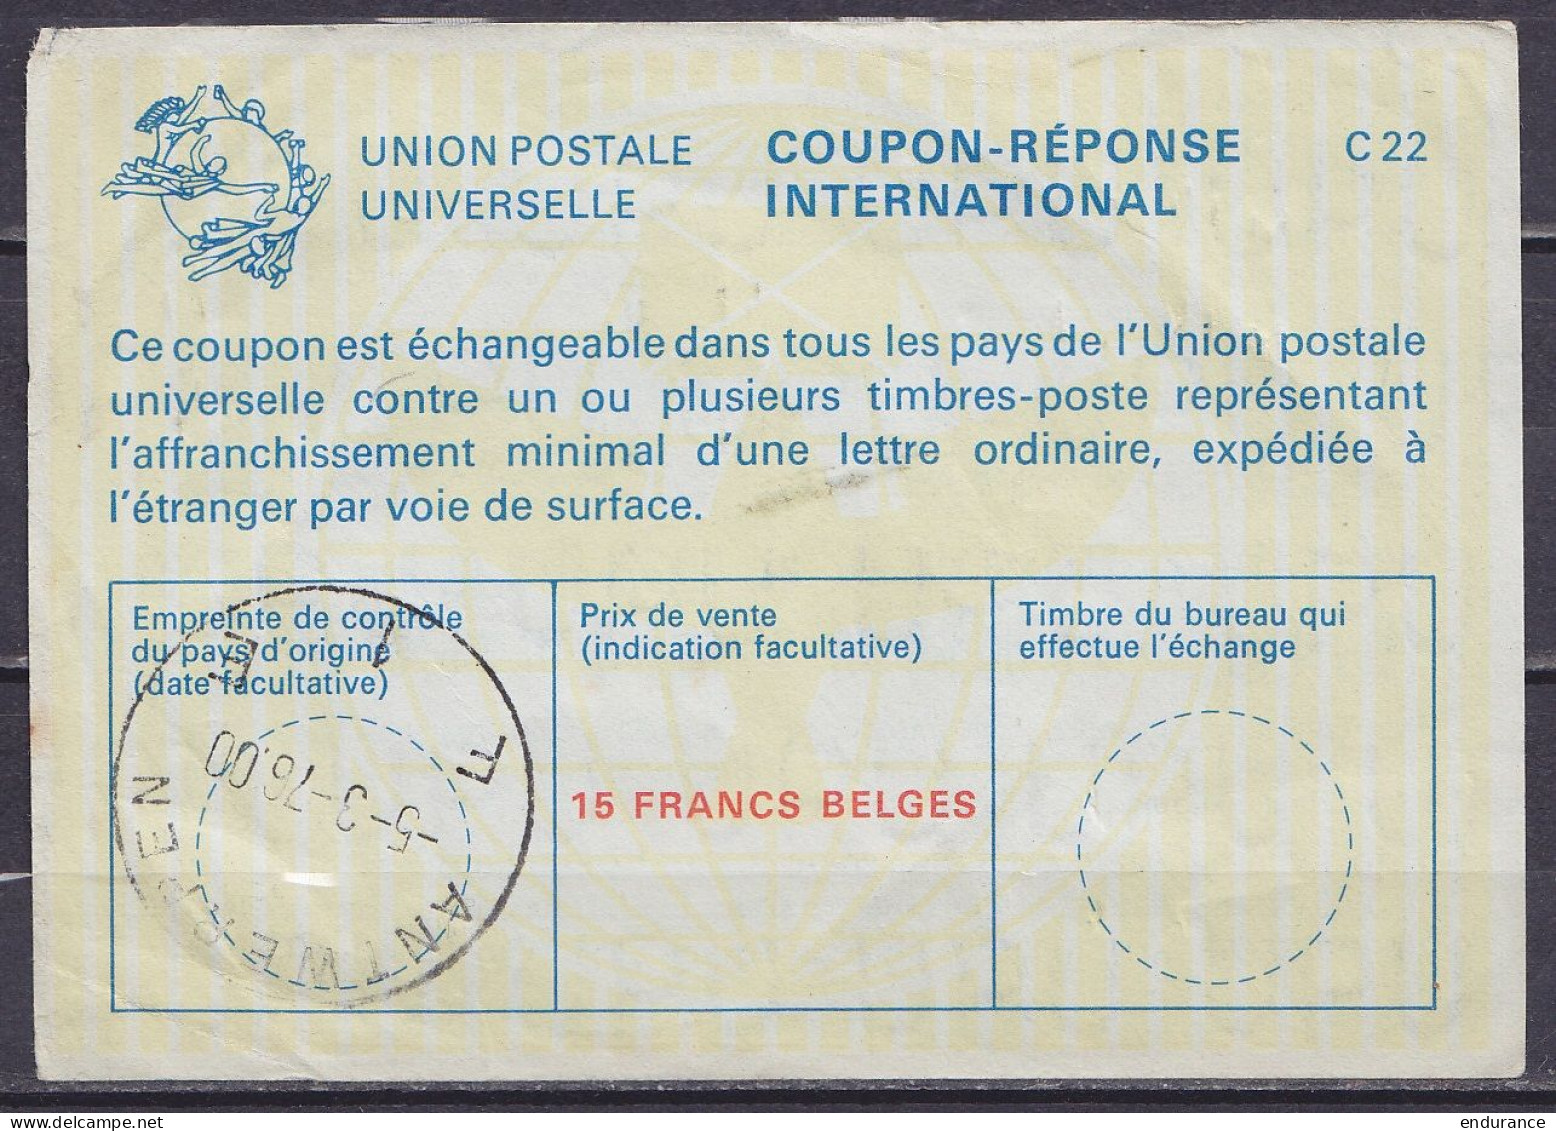 Coupon-réponse International - 15 Fancs Belges Càd ANTWERPEN F1E /-5-3-1976 - Internationale Antwortscheine